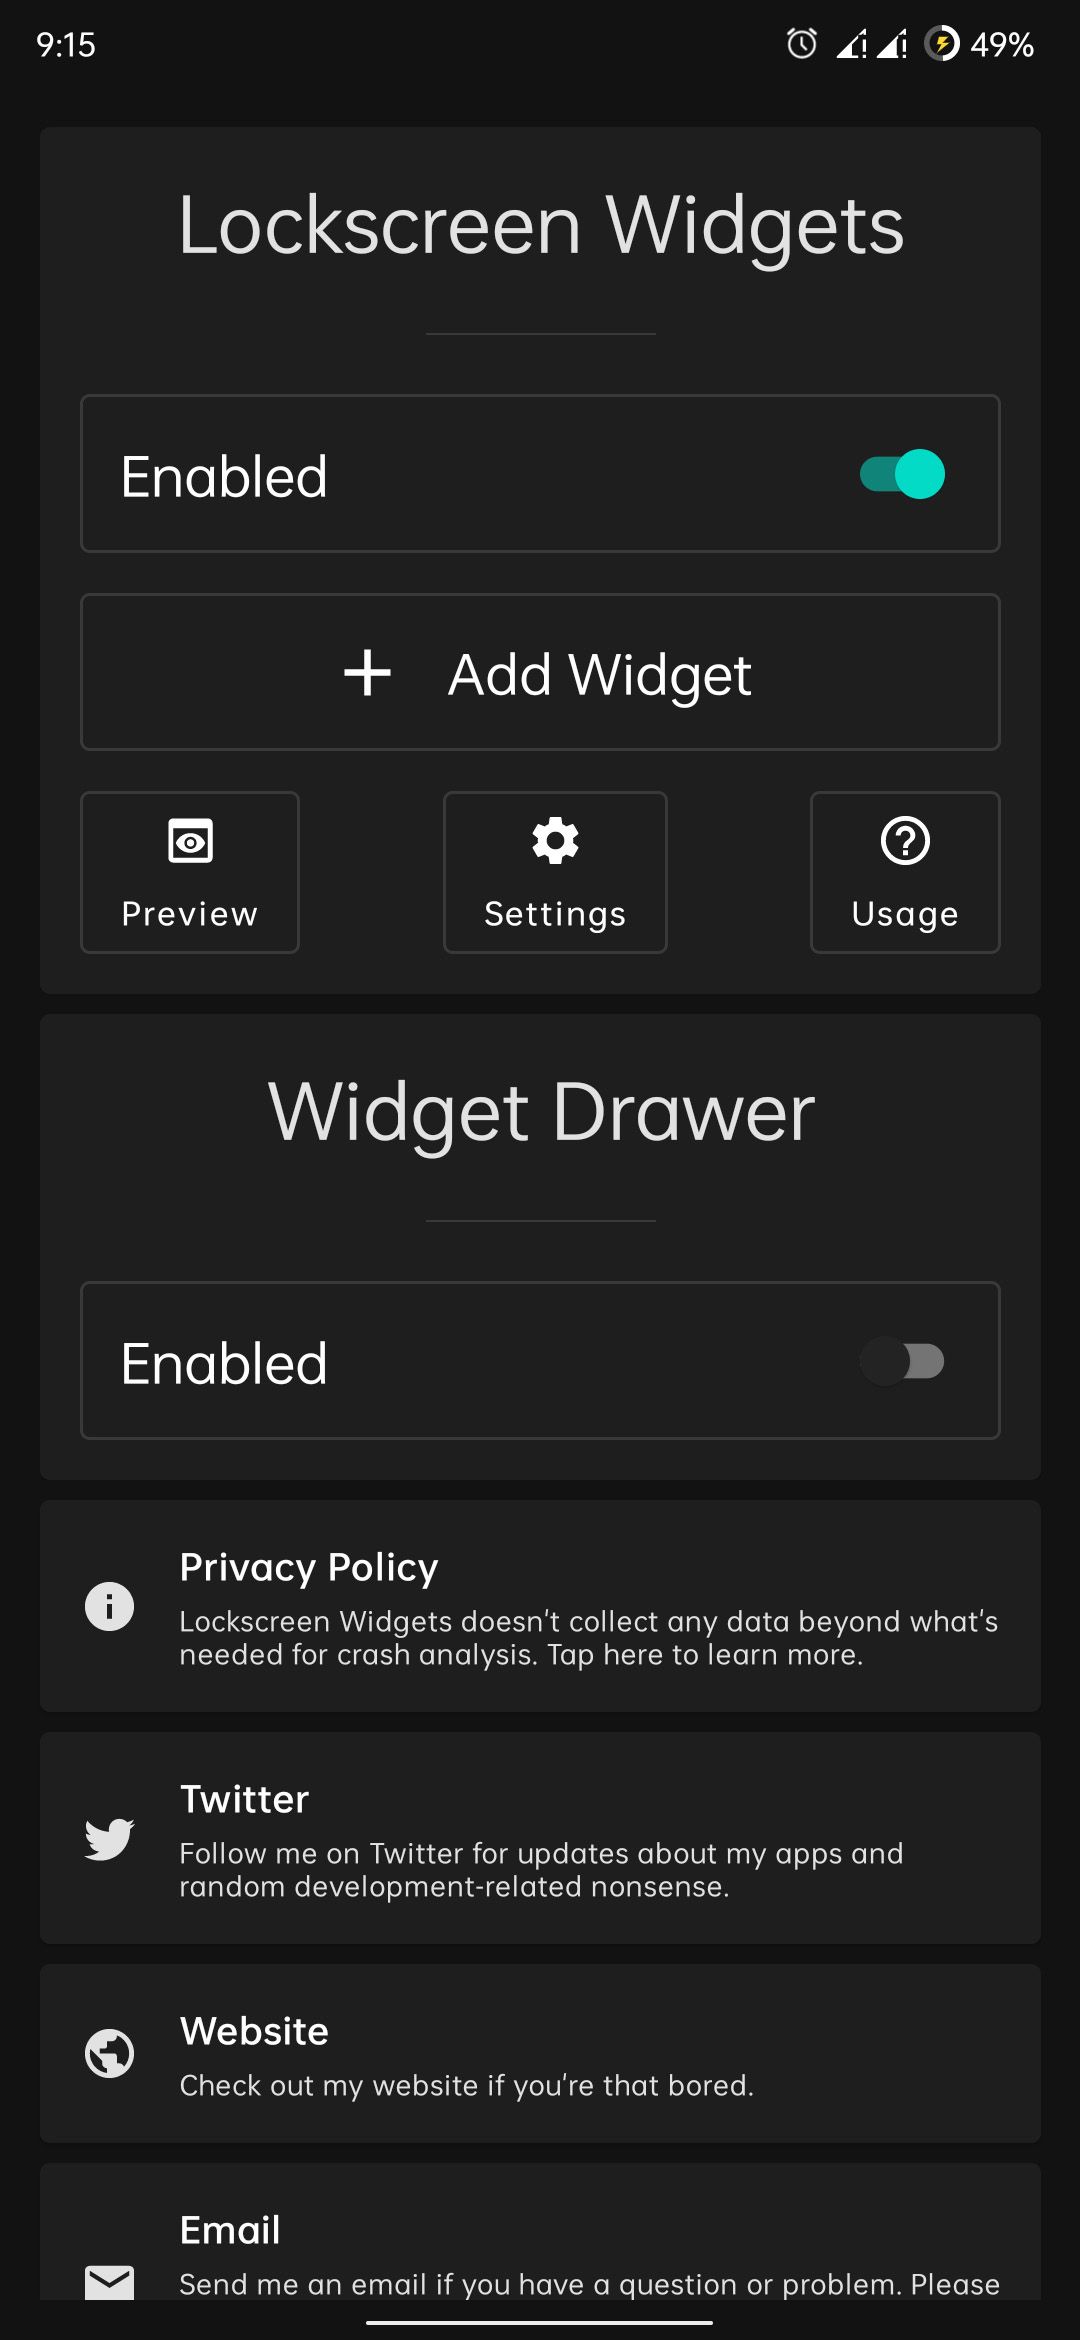 Option to enable lock screen widgets